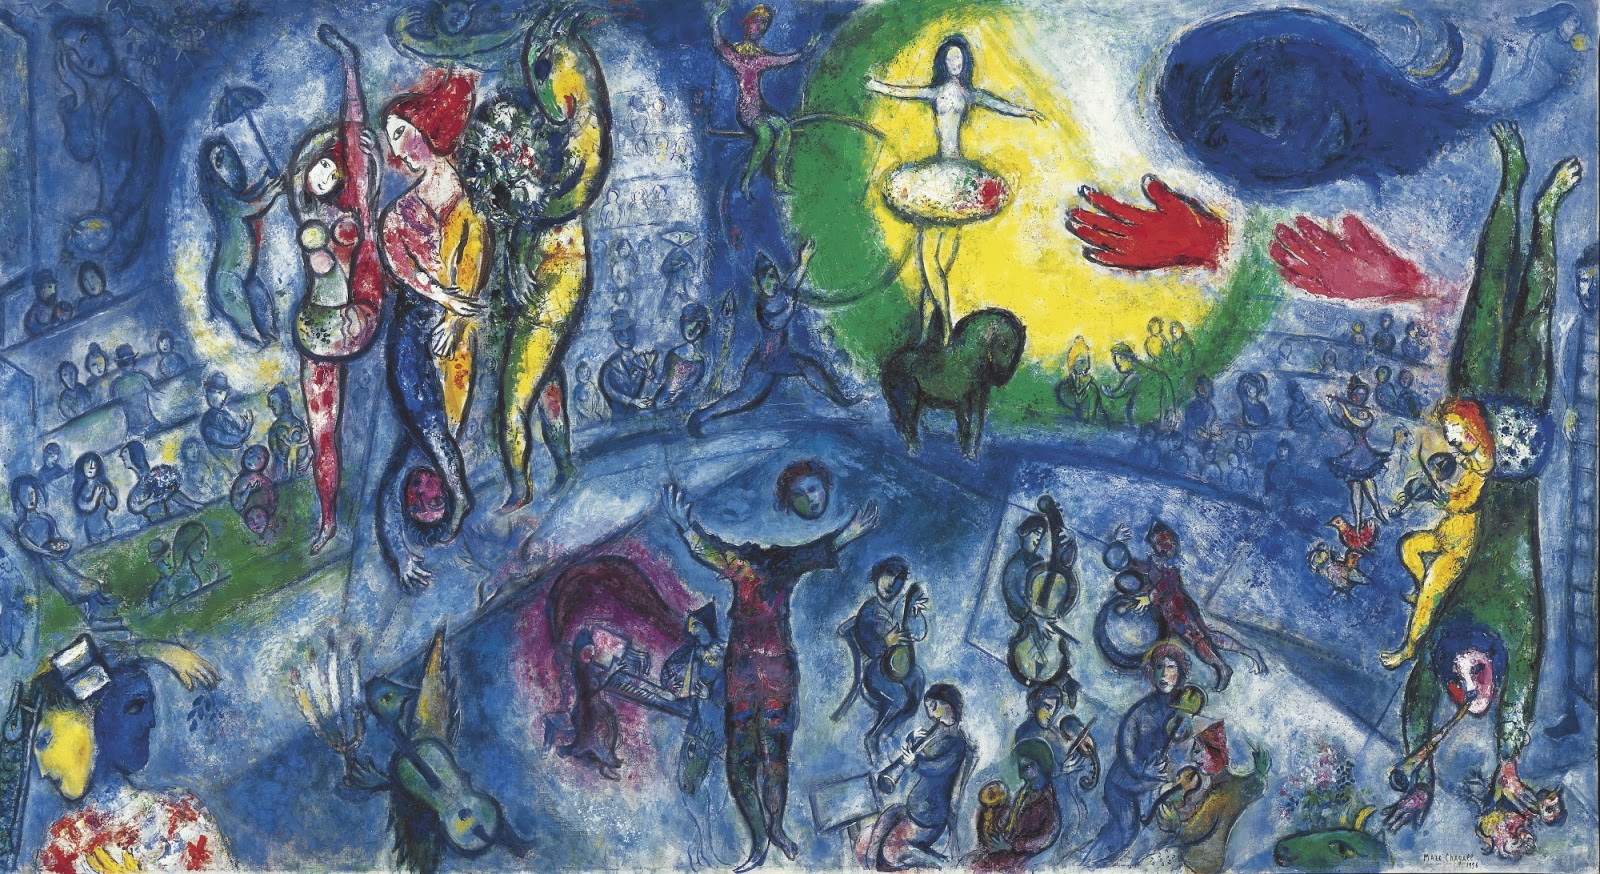 Marc+Chagall-1887-1985 (62).jpg